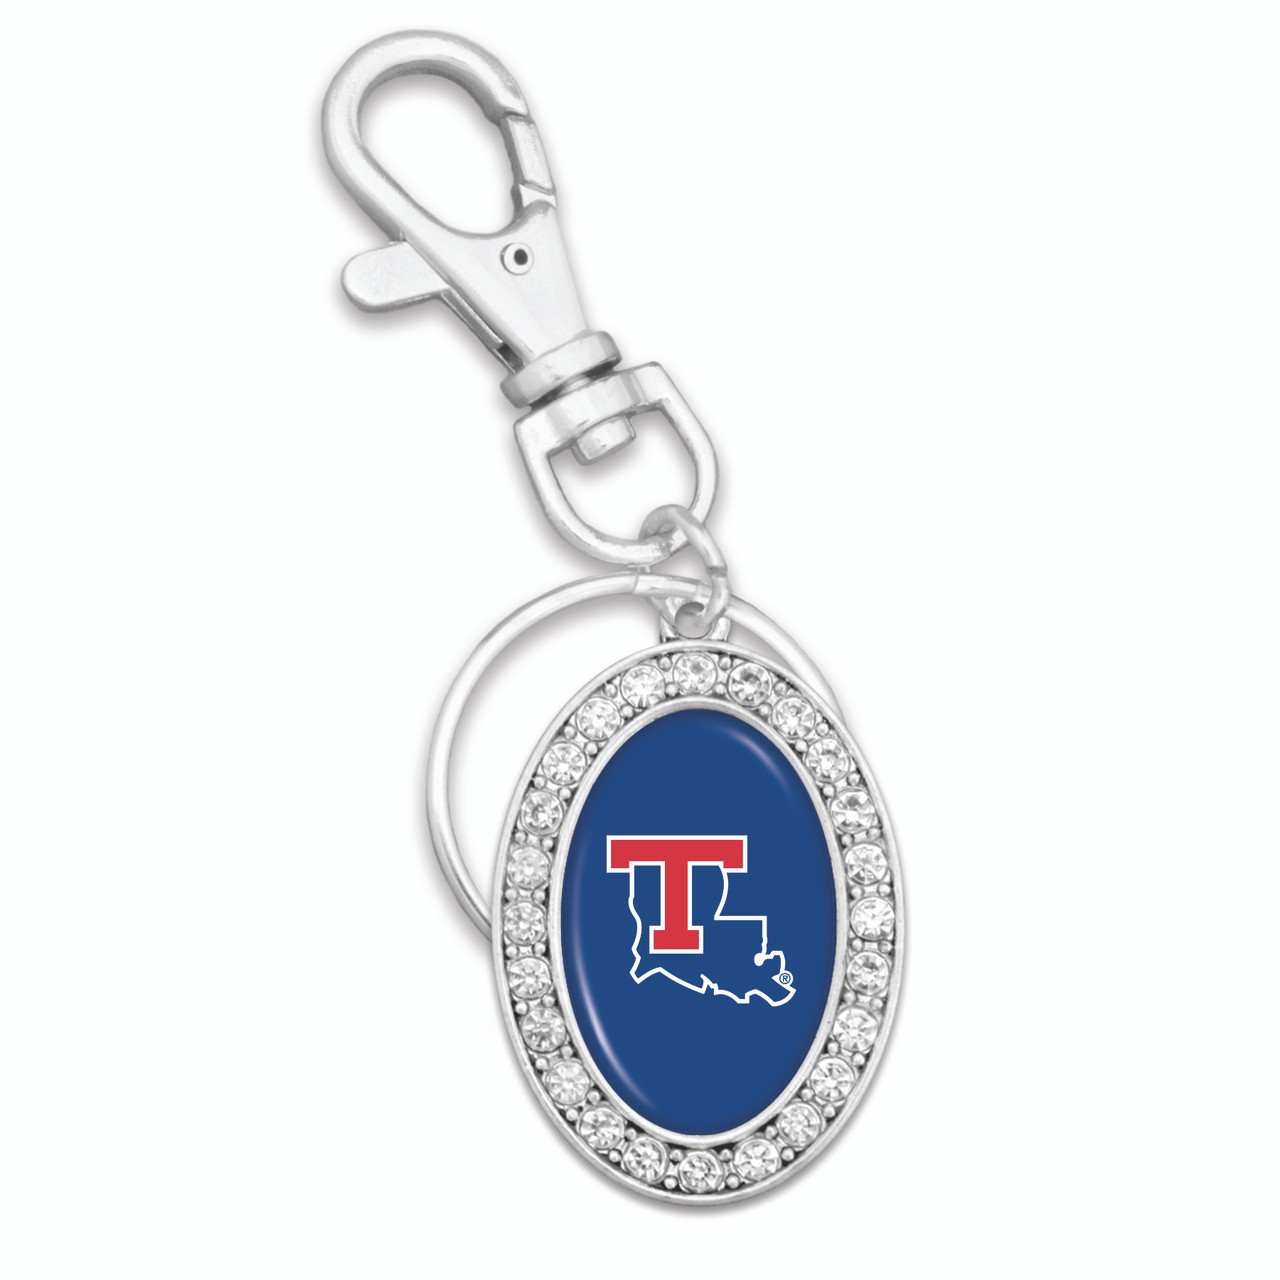 Louisiana Tech Bulldogs Key Chain- Oval Crystal